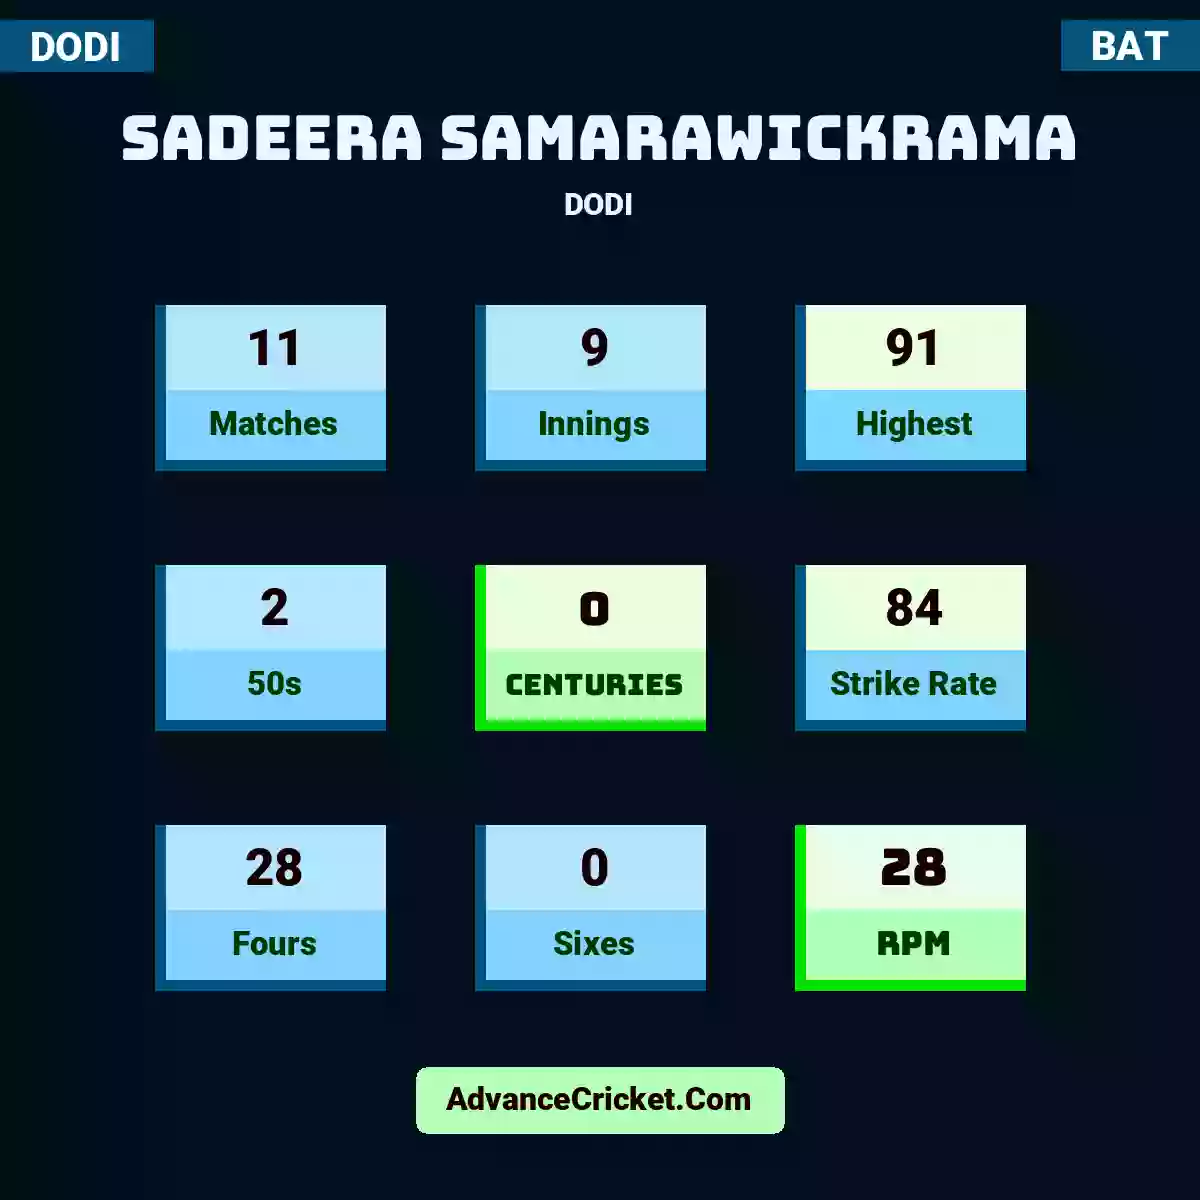 Sadeera Samarawickrama DODI , Sadeera Samarawickrama played 11 matches, scored 91 runs as highest, 2 half-centuries, and 0 centuries, with a strike rate of 84. S.Samarawickrama hit 28 fours and 0 sixes, with an RPM of 28.